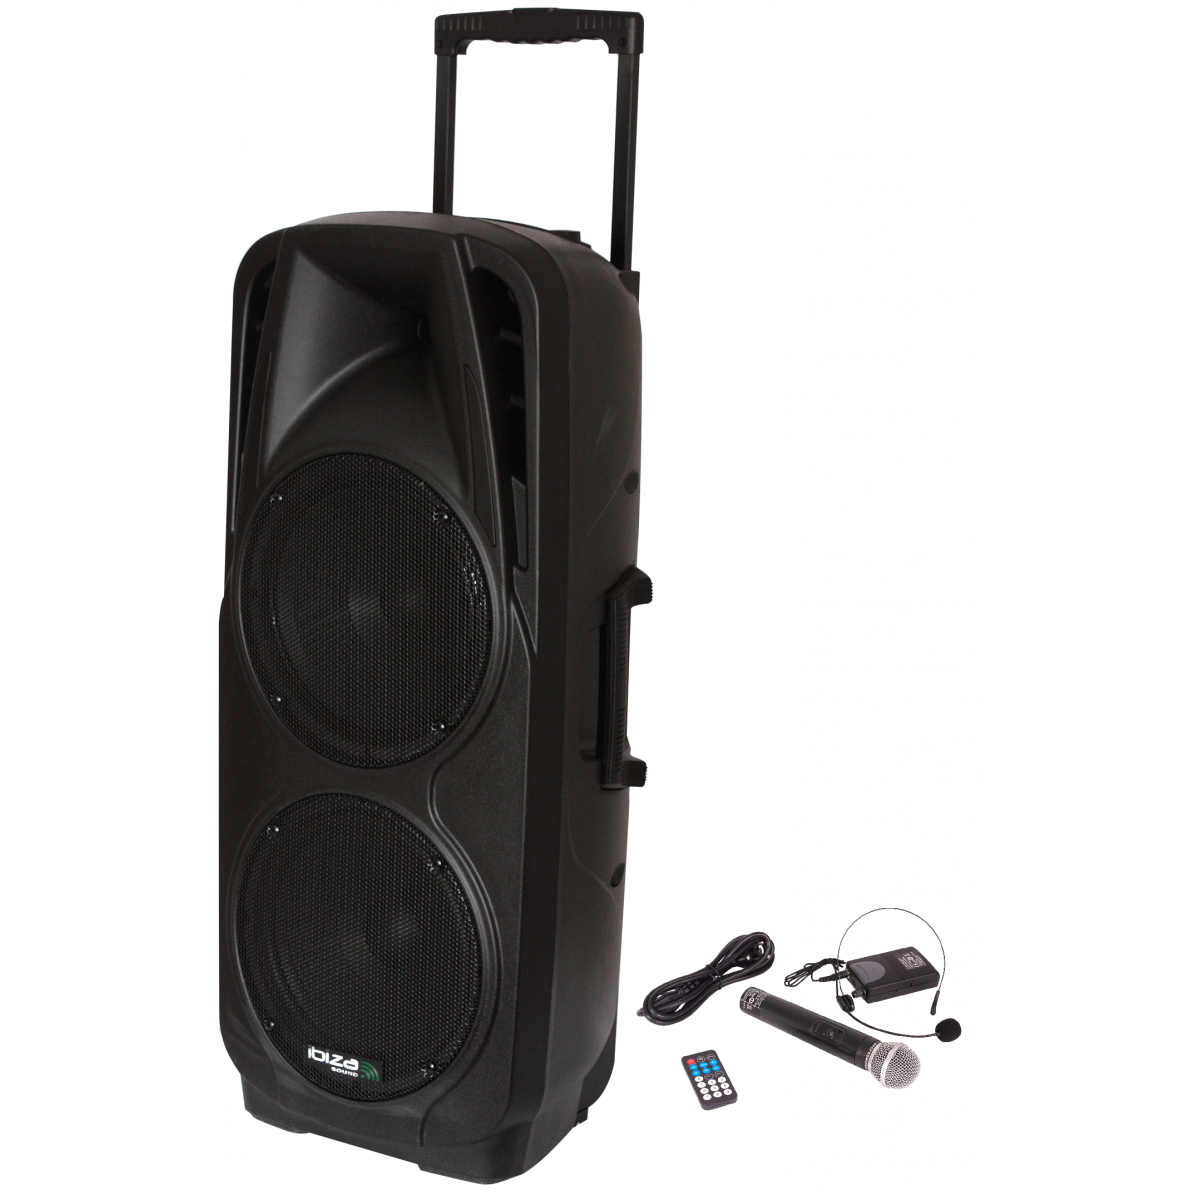 Sonos portables sur batteries - Ibiza Sound - PORT225VHF-BT